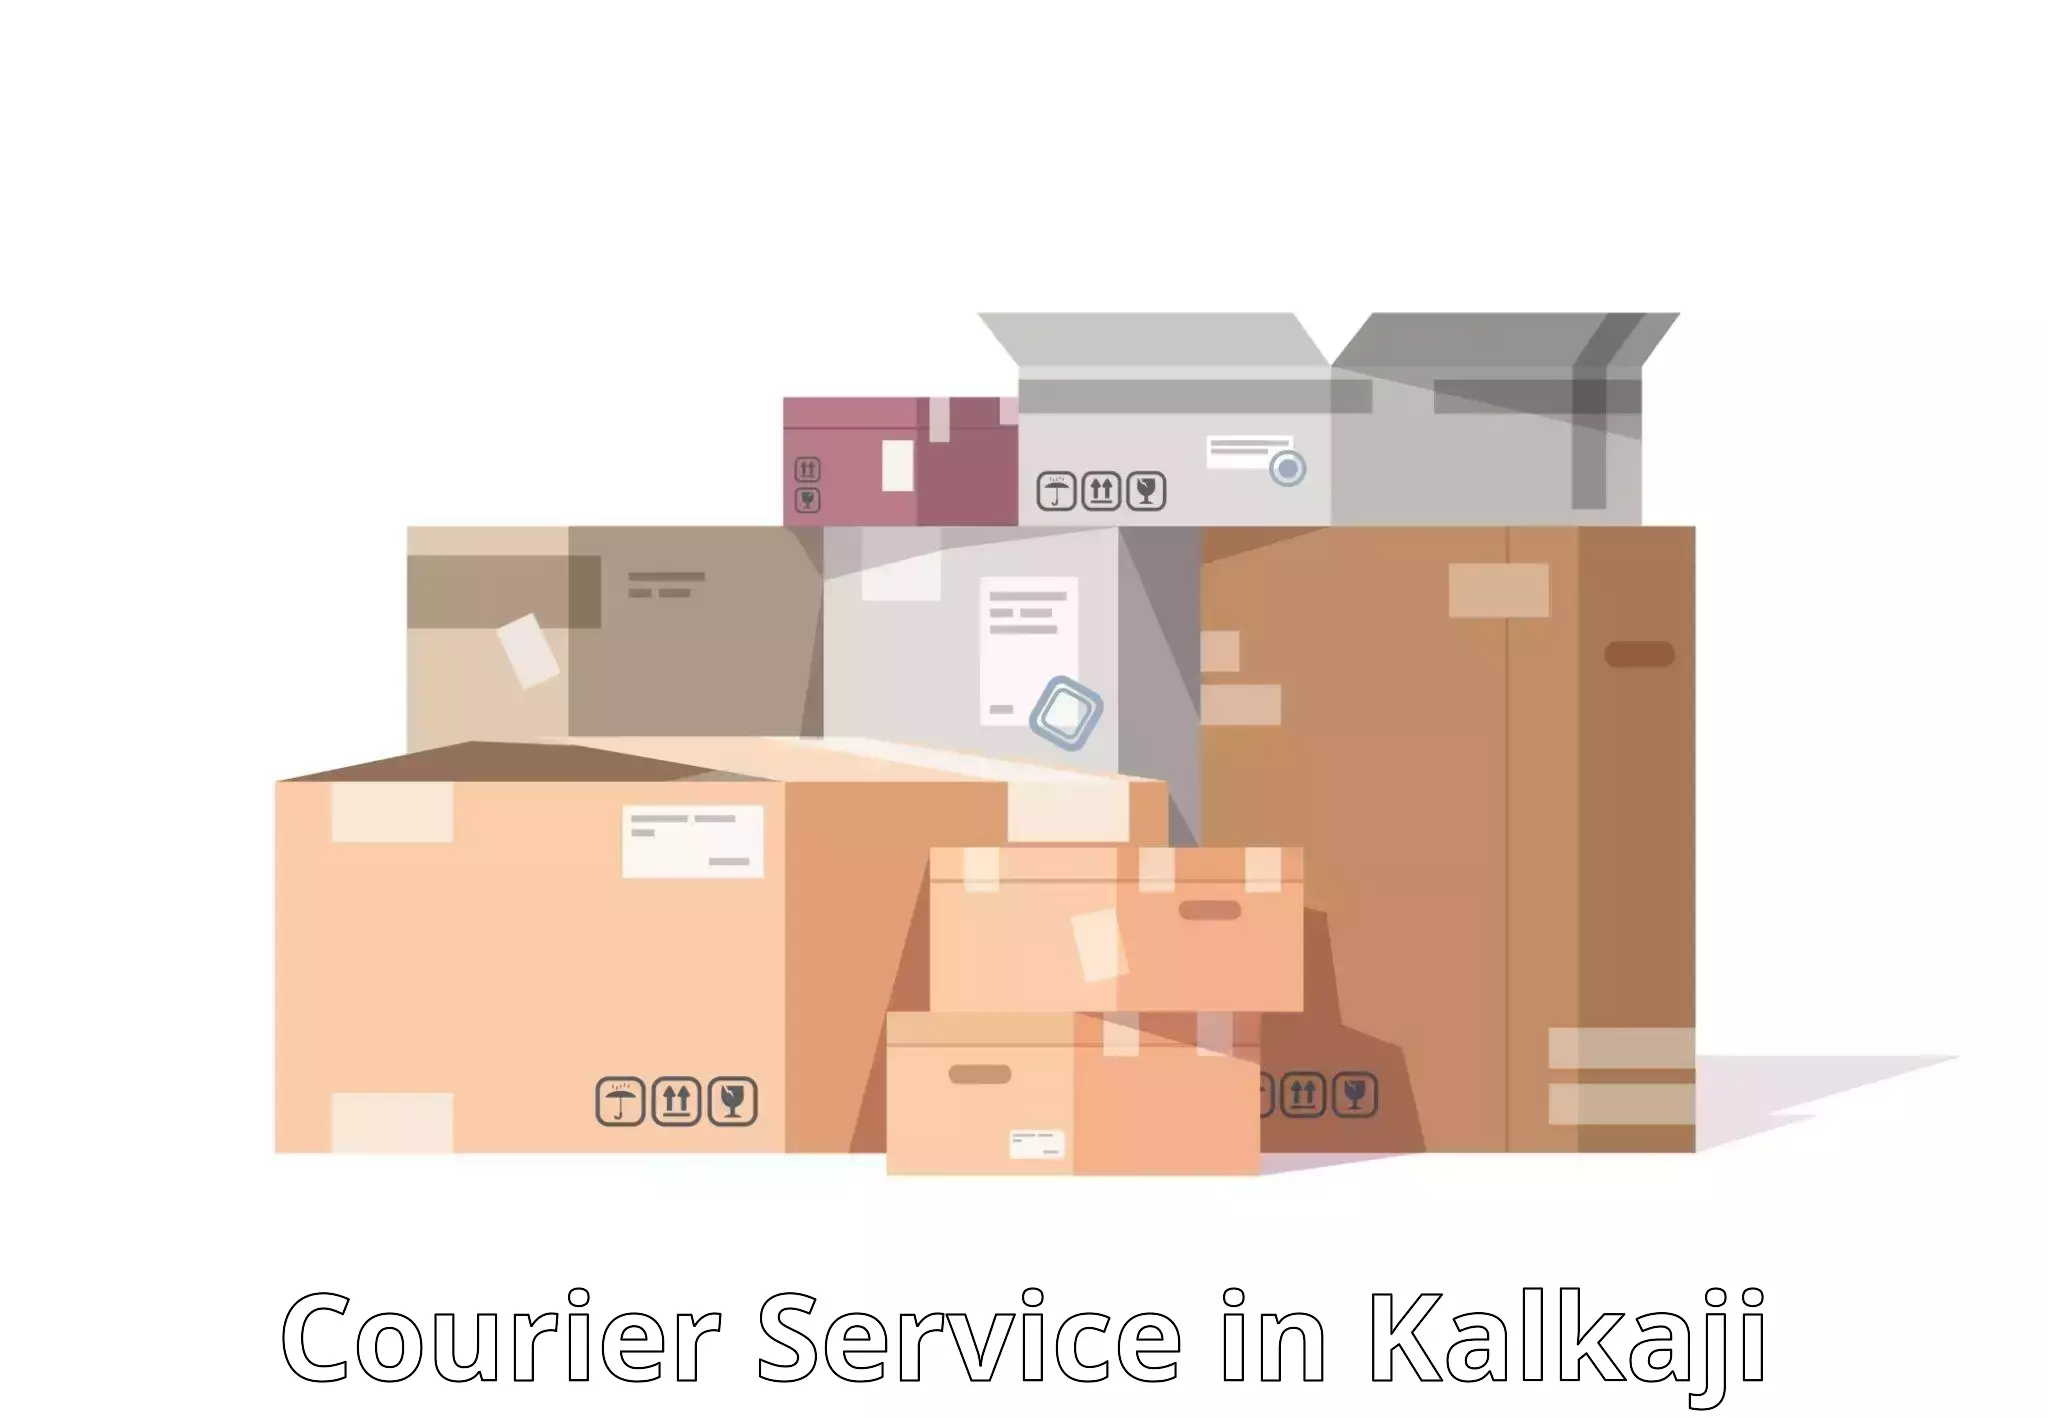 Nationwide delivery network in Kalkaji